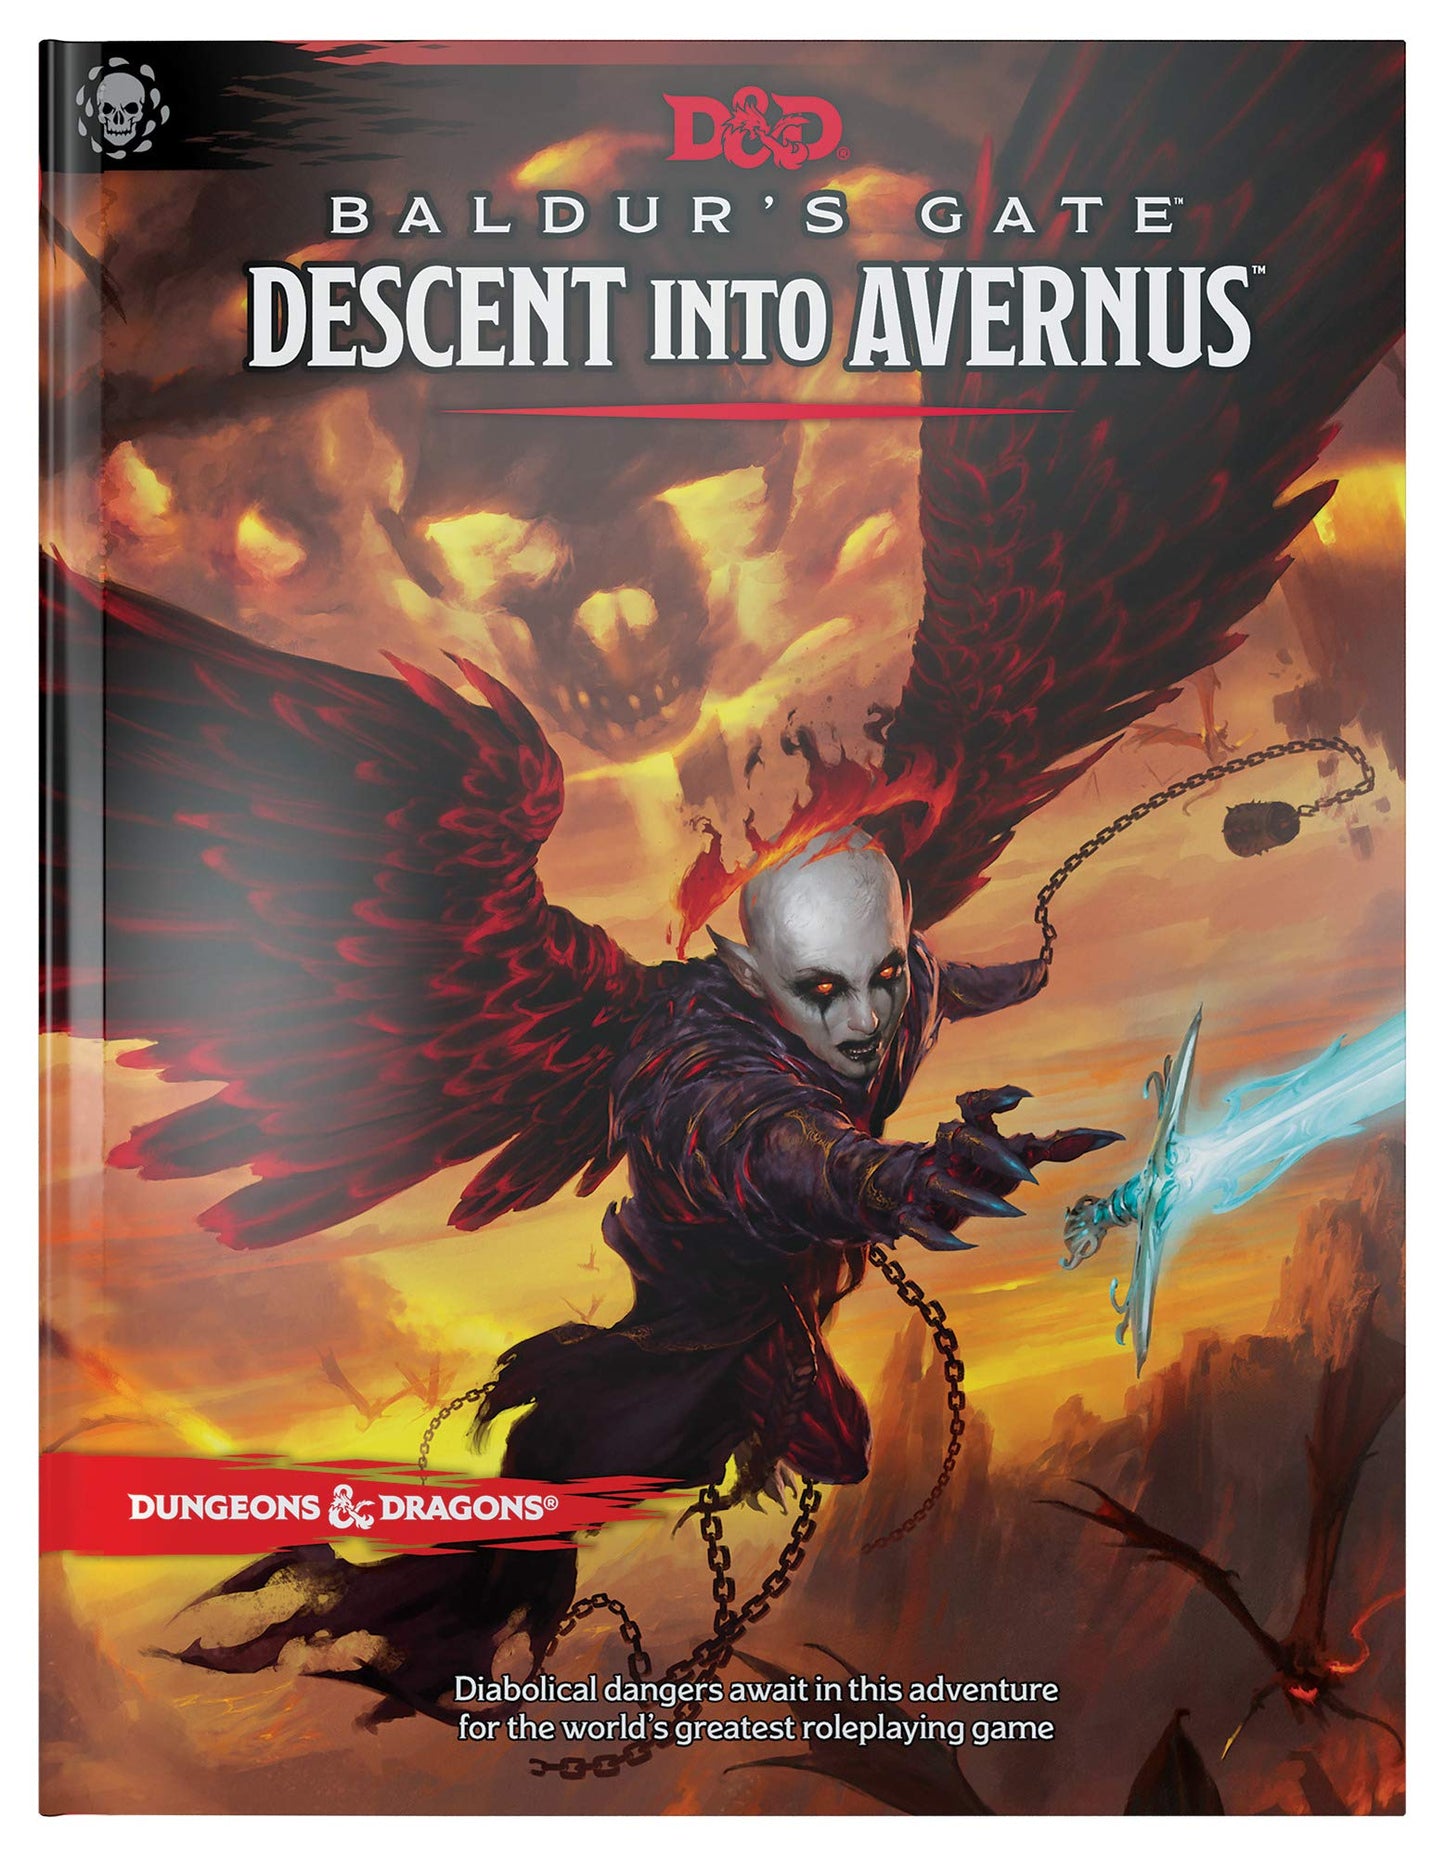 Dungeons & Dragons: Baldur’s Gate - Descent Into Avernus (5th Edition)